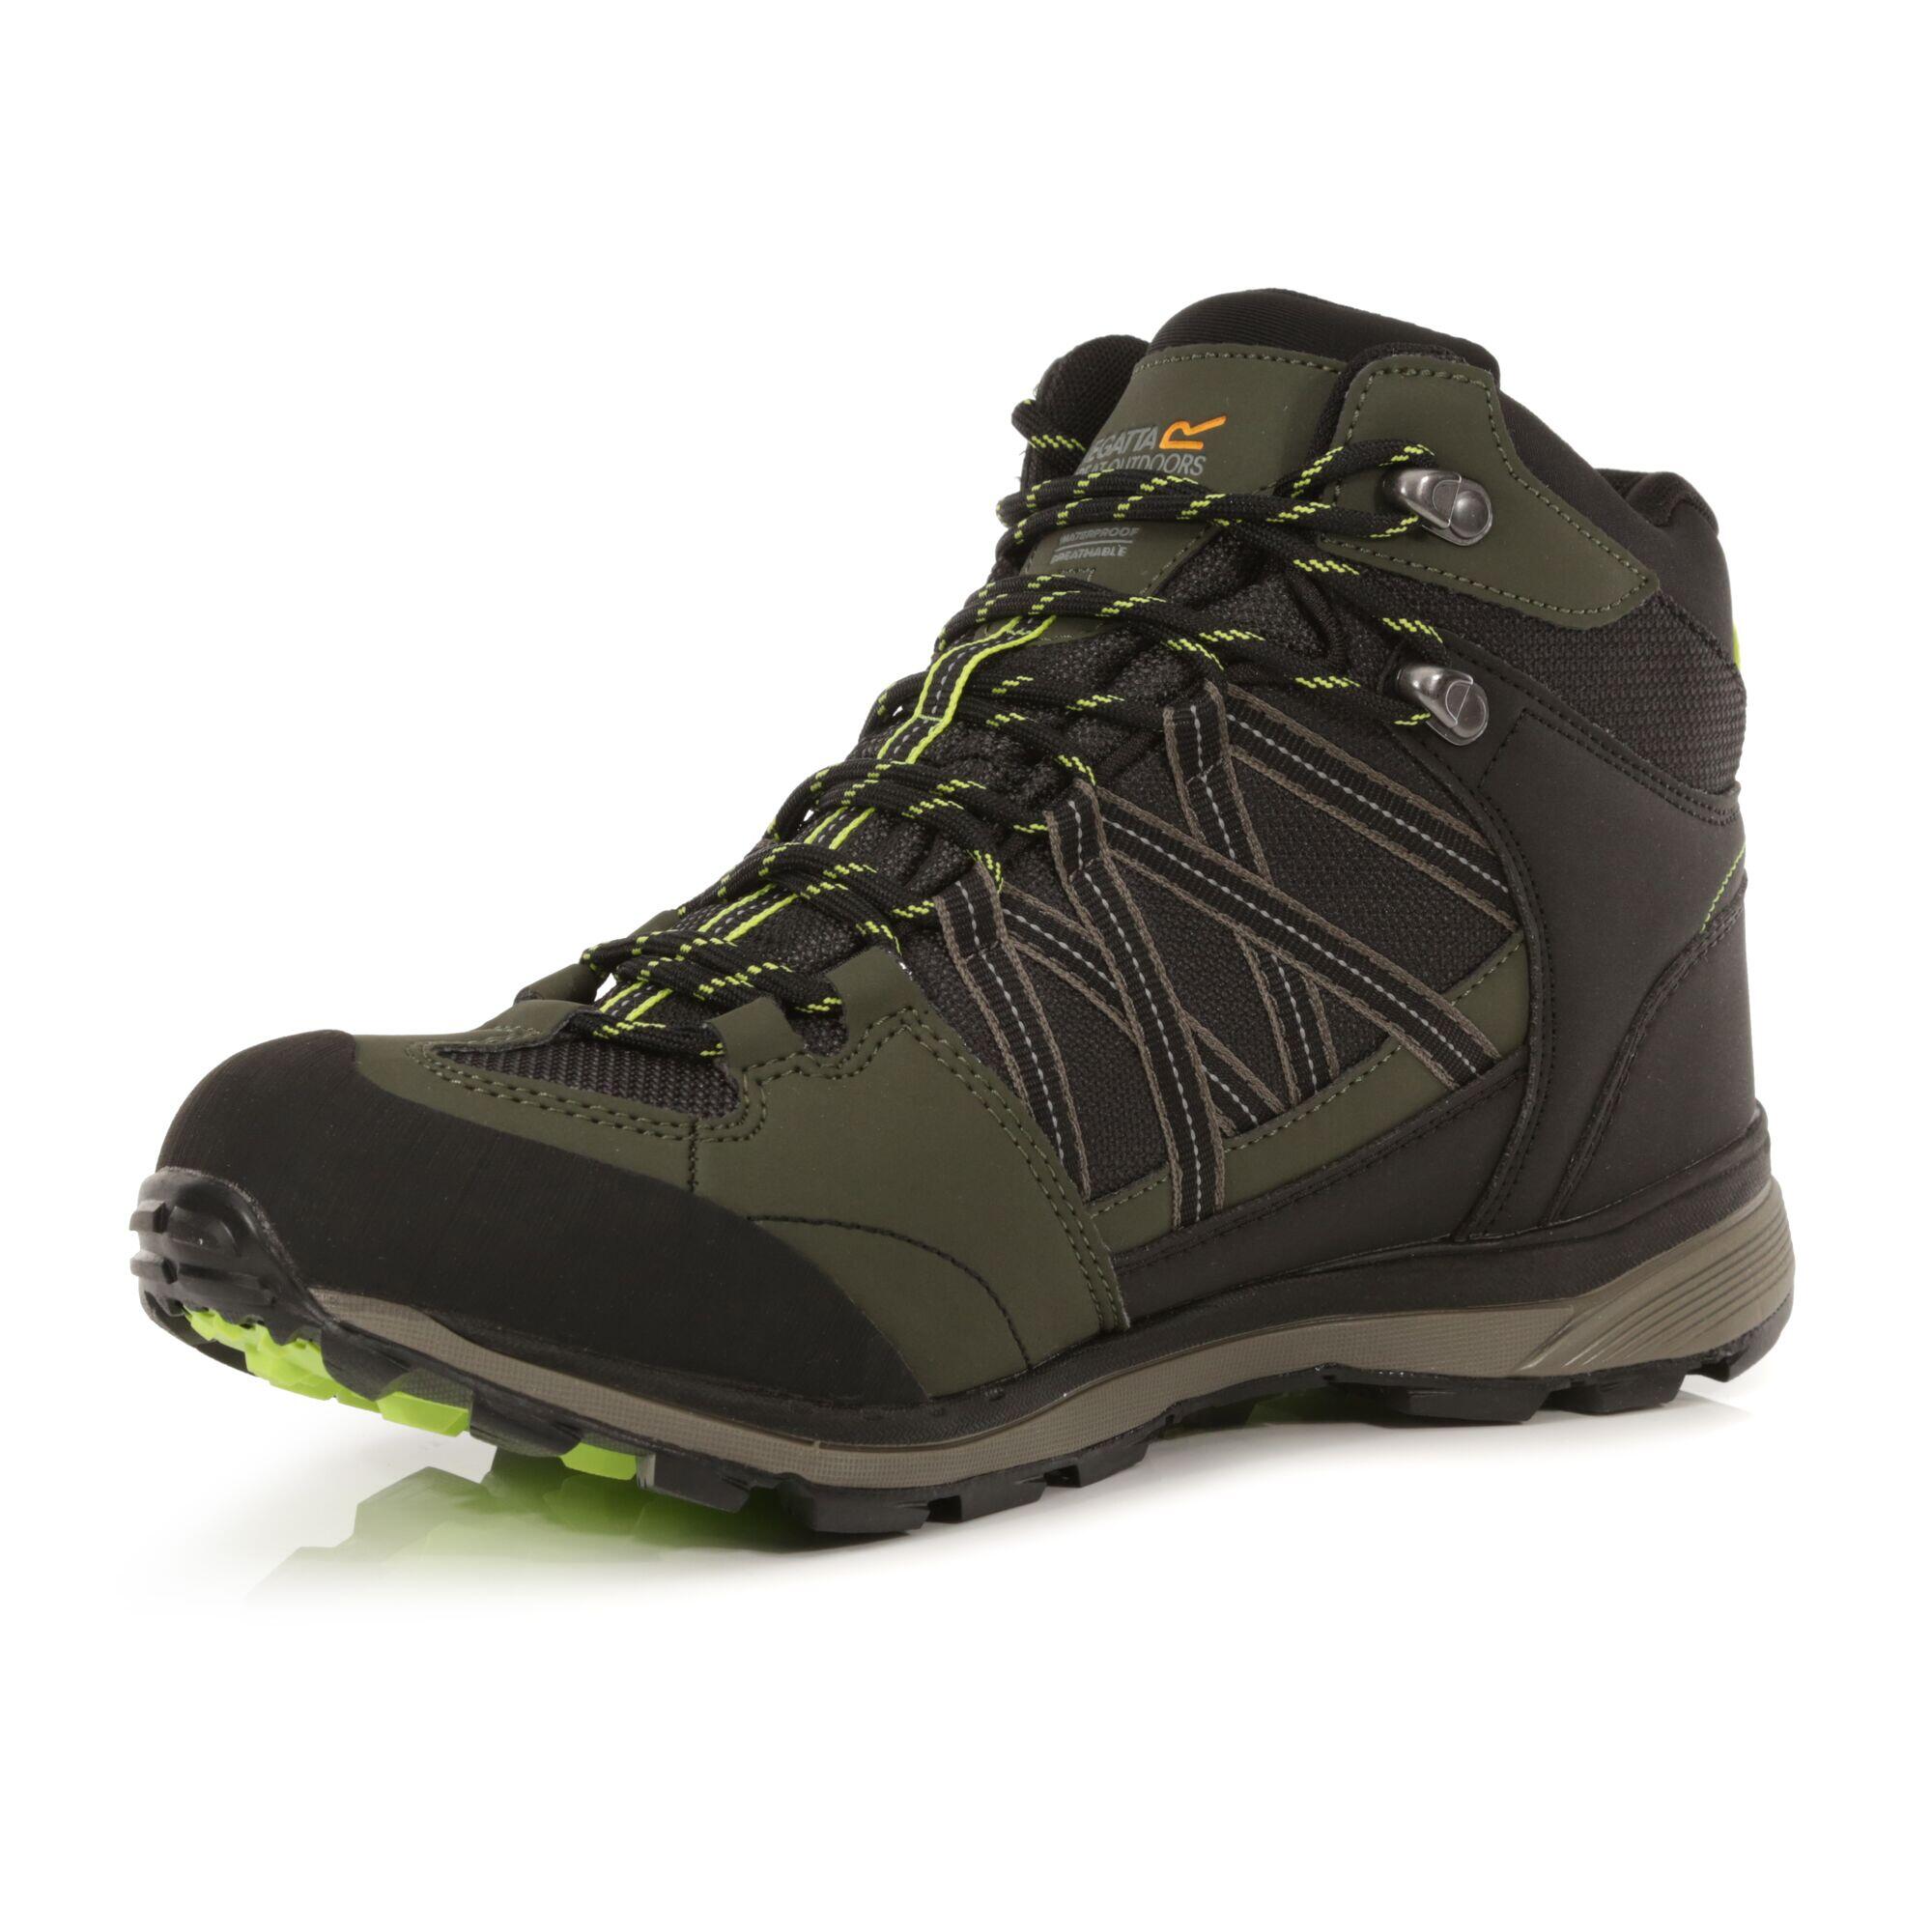 Samaris II Men's Hiking Boots - Dark Khaki/Light Green 3/6